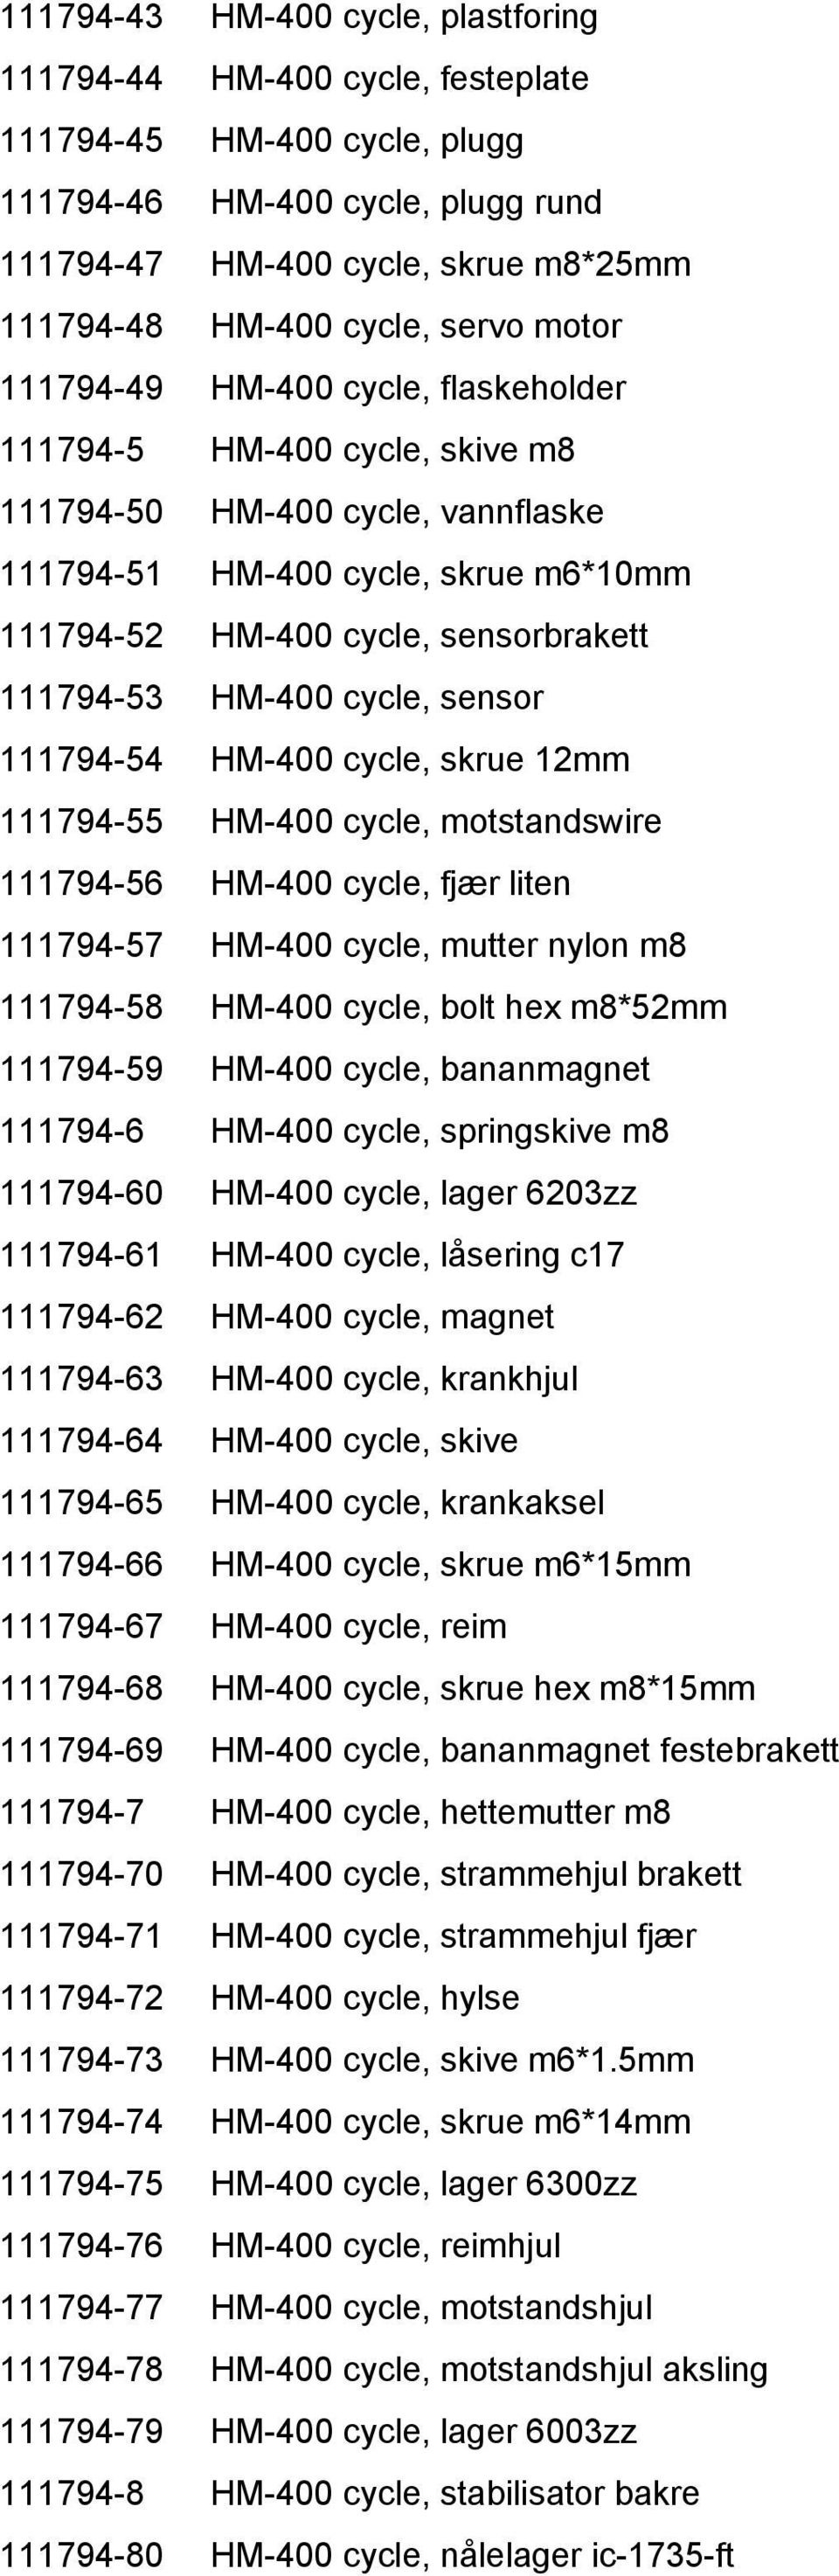 111794-53 HM-400 cycle, sensor 111794-54 HM-400 cycle, skrue 12mm 111794-55 HM-400 cycle, motstandswire 111794-56 HM-400 cycle, fjær liten 111794-57 HM-400 cycle, mutter nylon m8 111794-58 HM-400